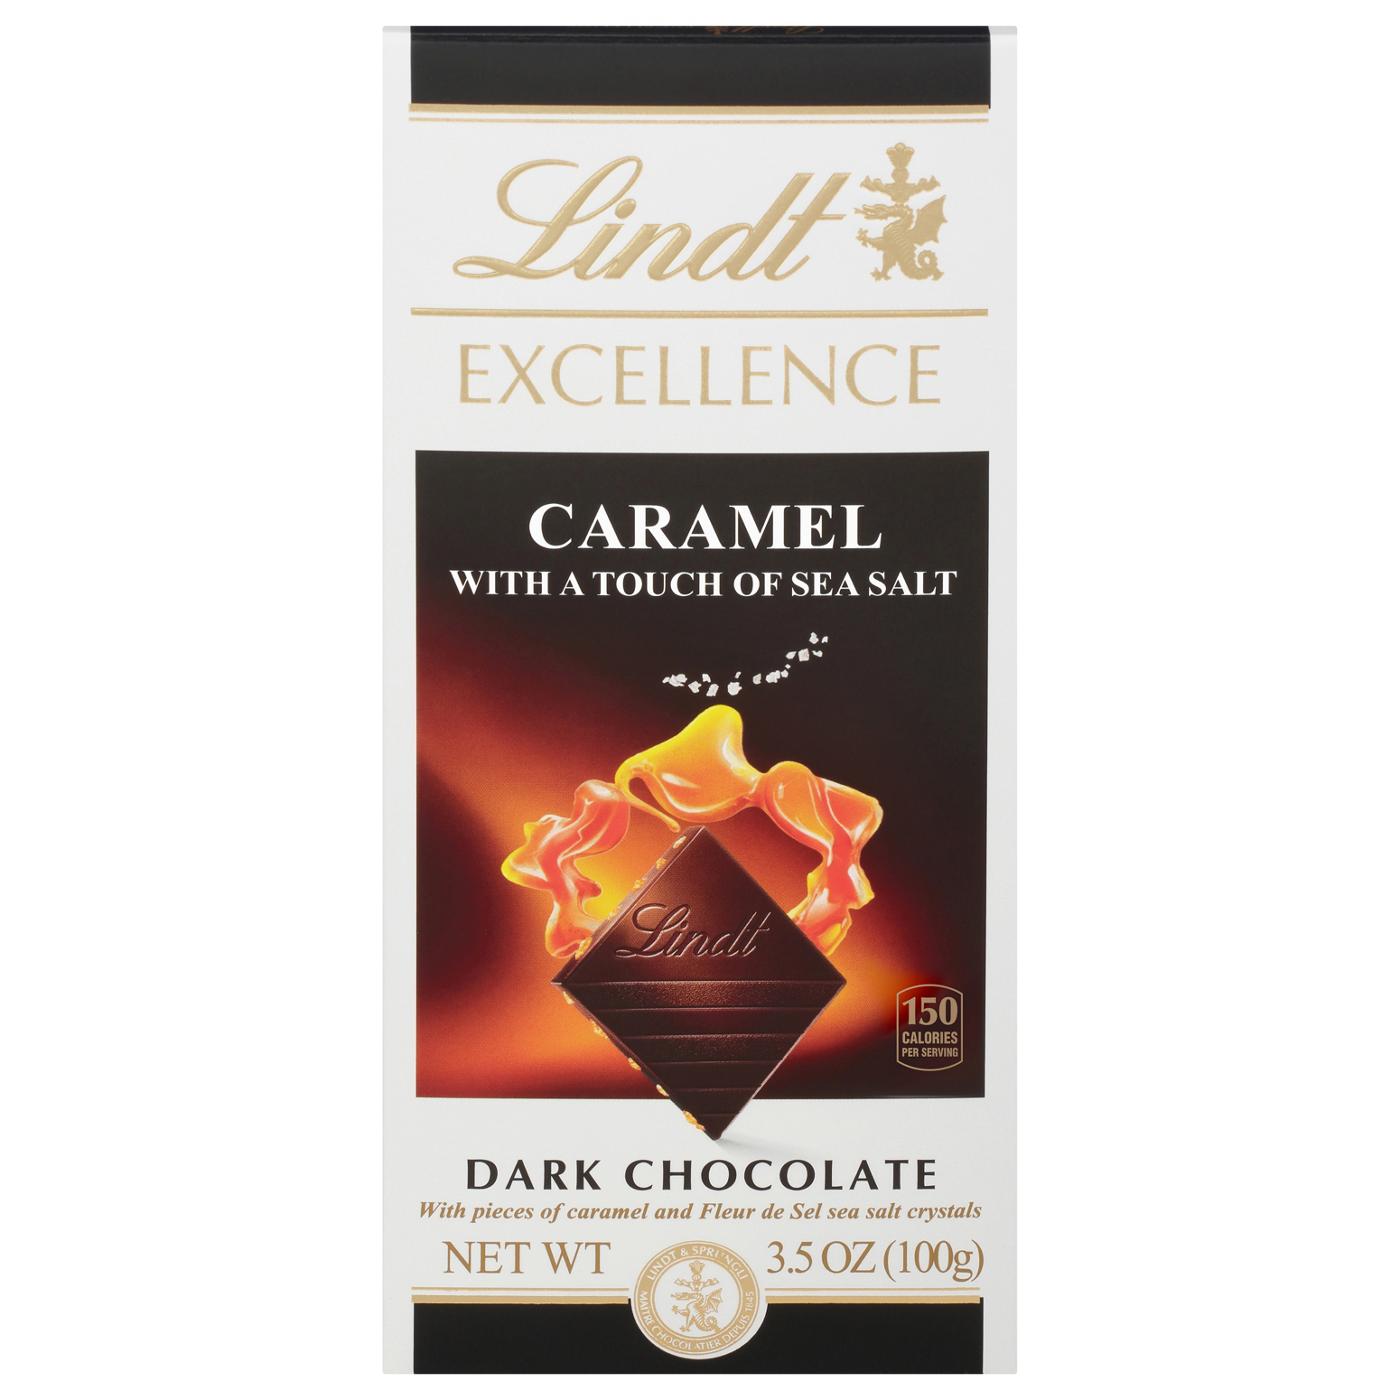 Lindt Excellence Caramel Dark Chocolate Bar; image 1 of 2